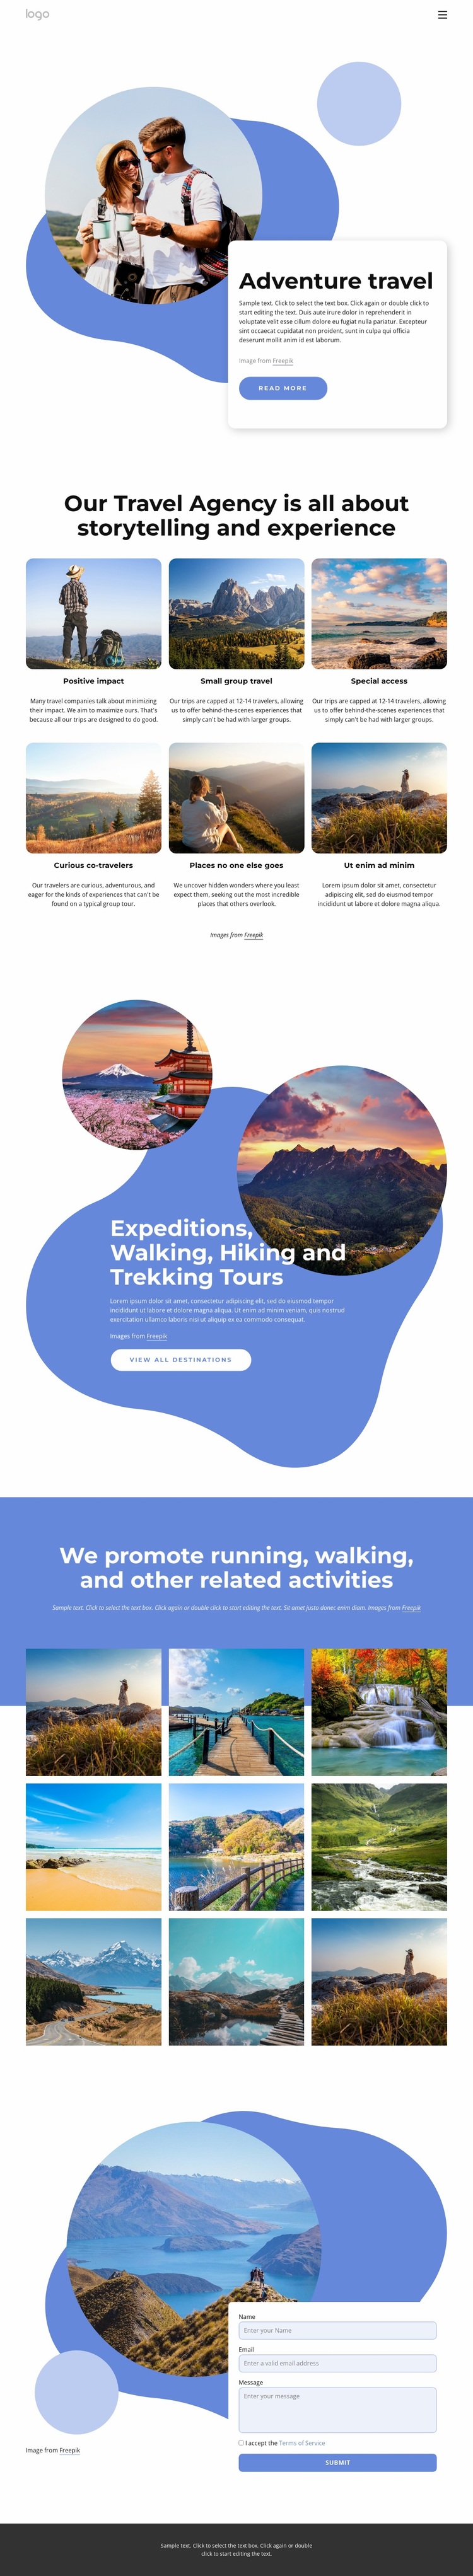 Agency specializing in luxury adventure travel Website Design